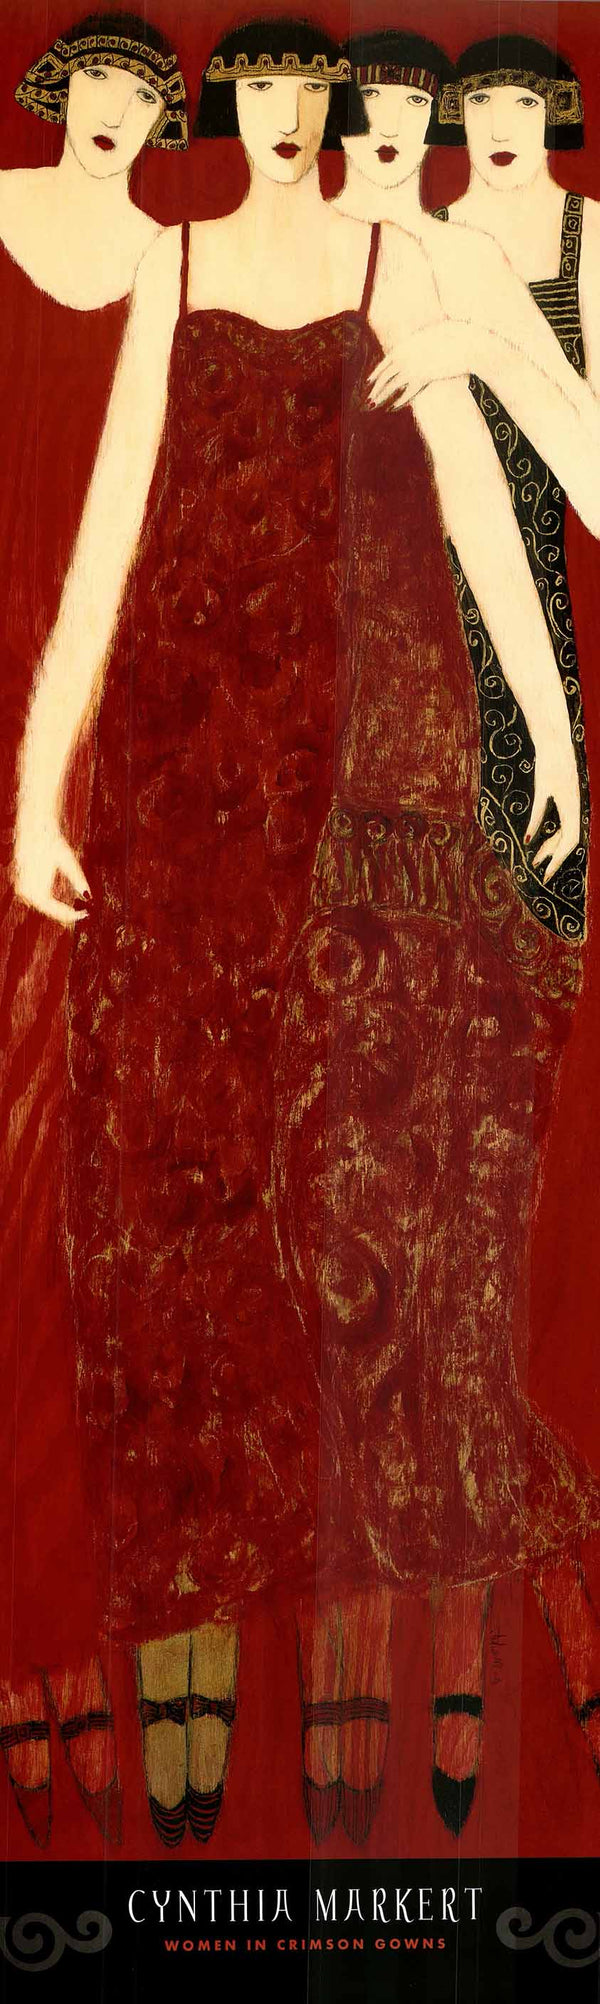 Women in Crimson Gowns by Cynthia Markert - 12 X 39" - Fine Art Poster.